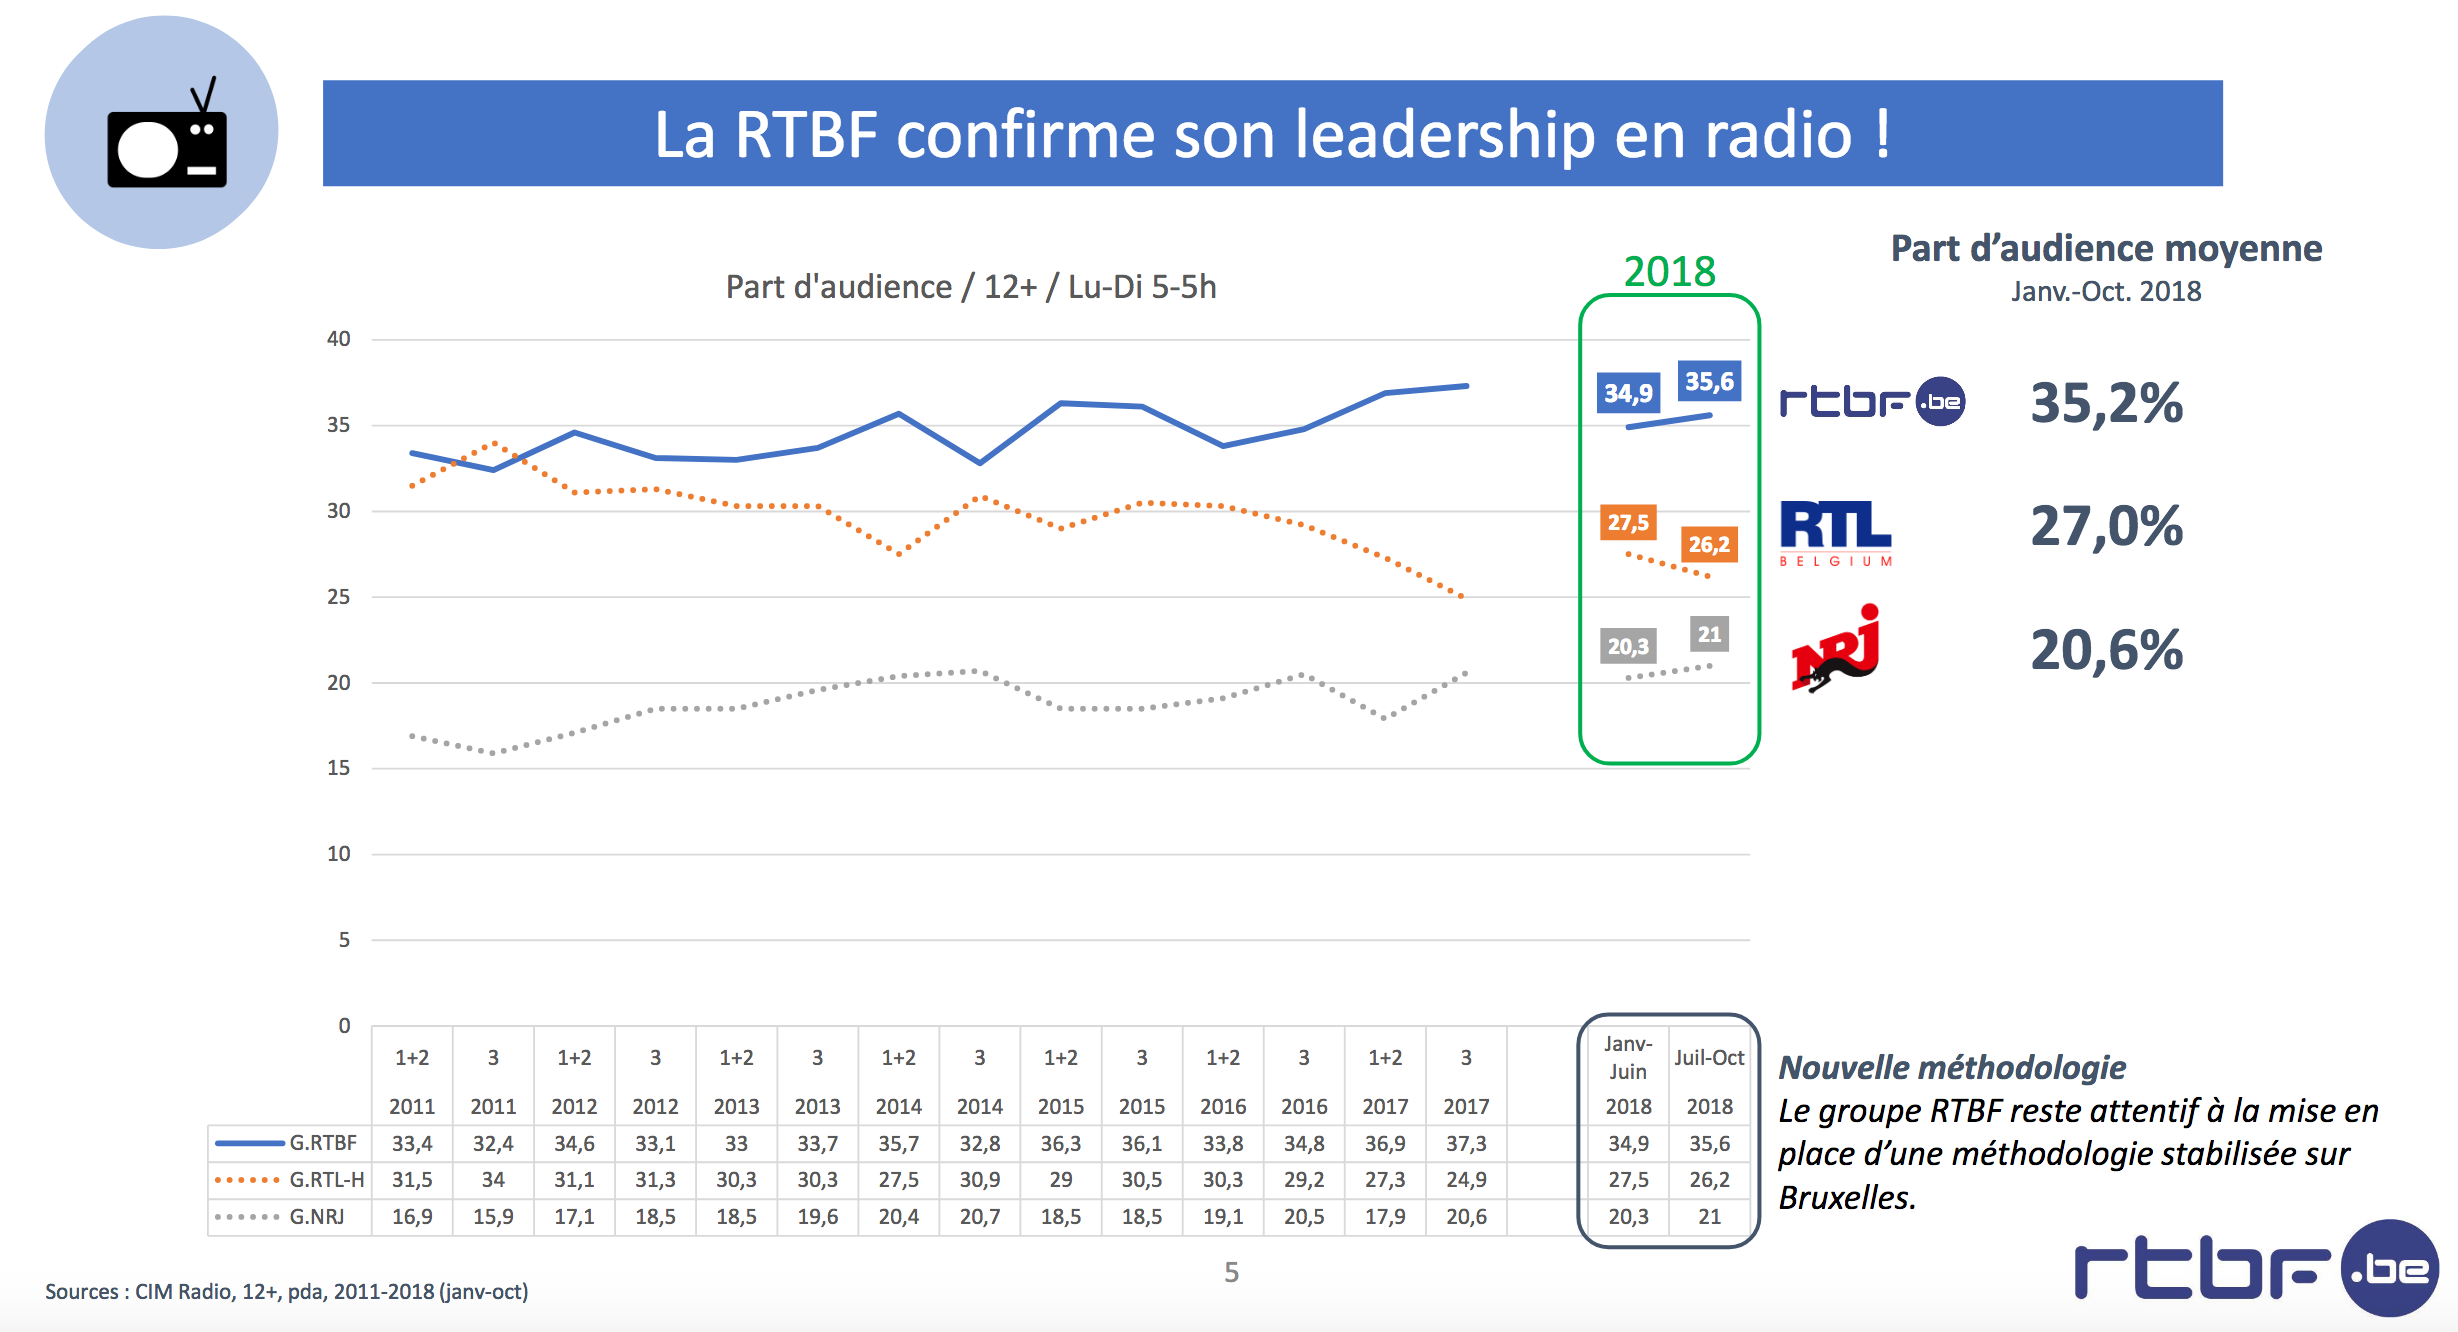 La RTBF confirme son leadership en radio